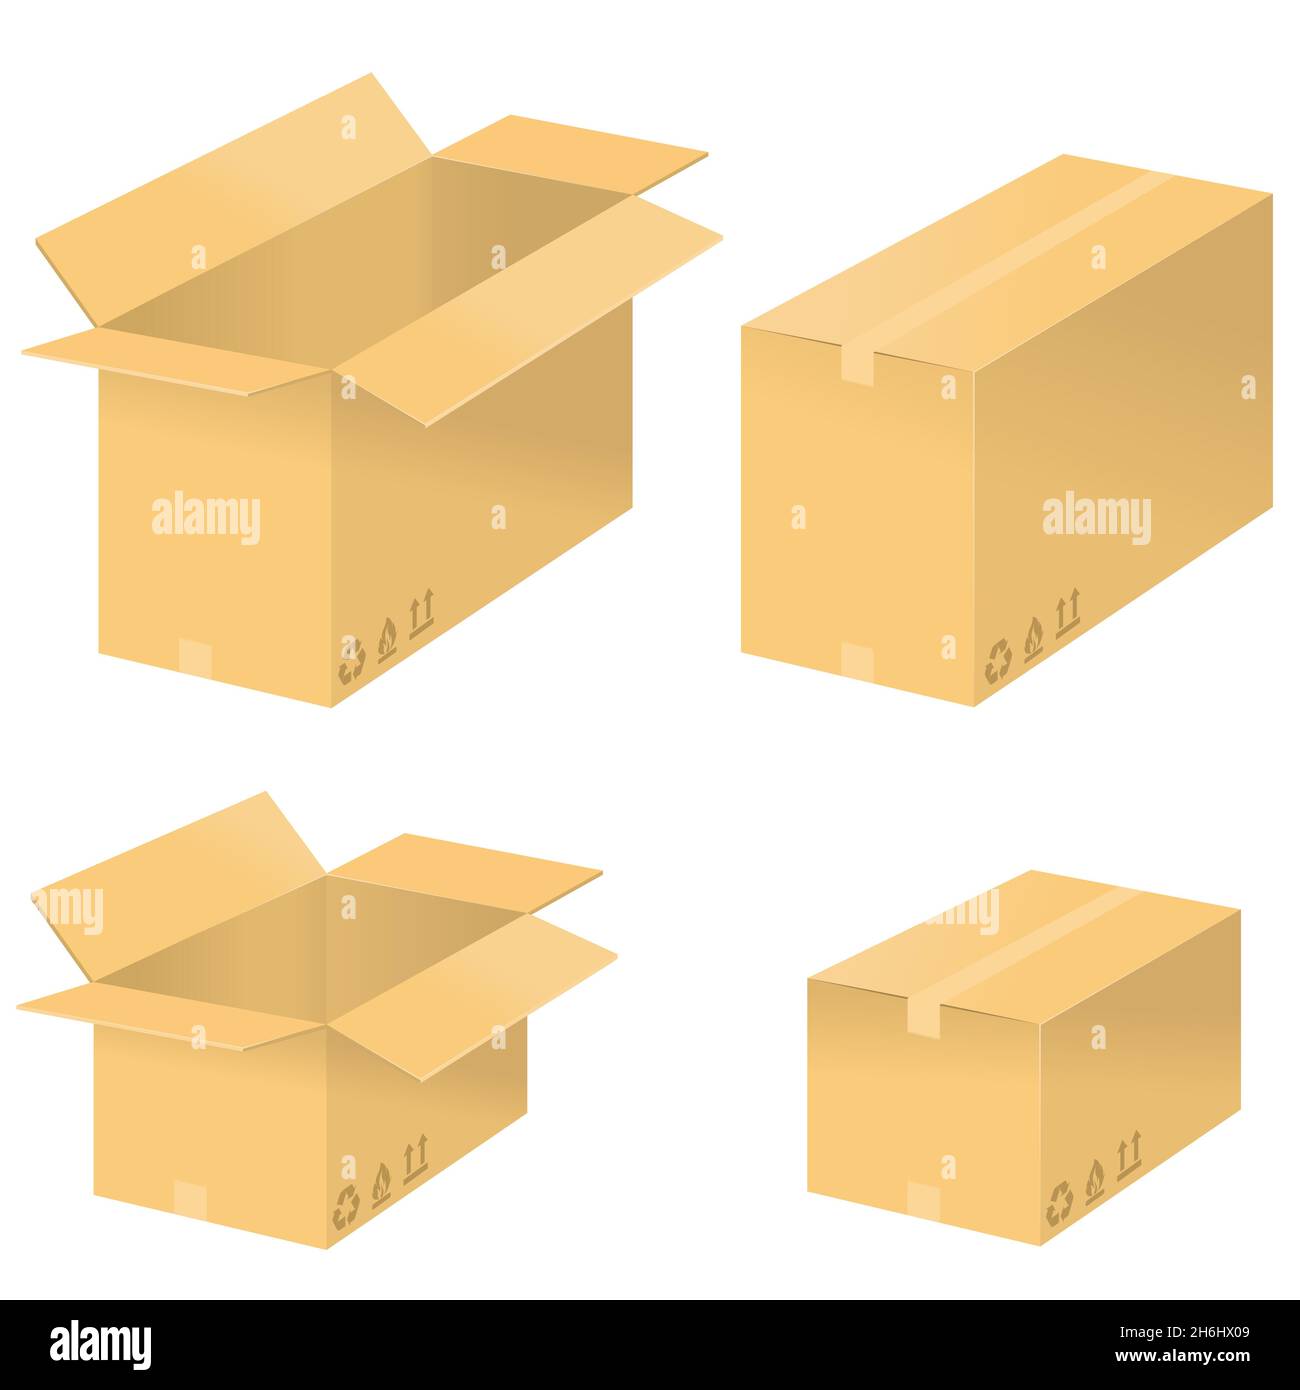 Vektor-Design der Karton-Box mit Verpackungssymbolen Stock-Vektorgrafik -  Alamy